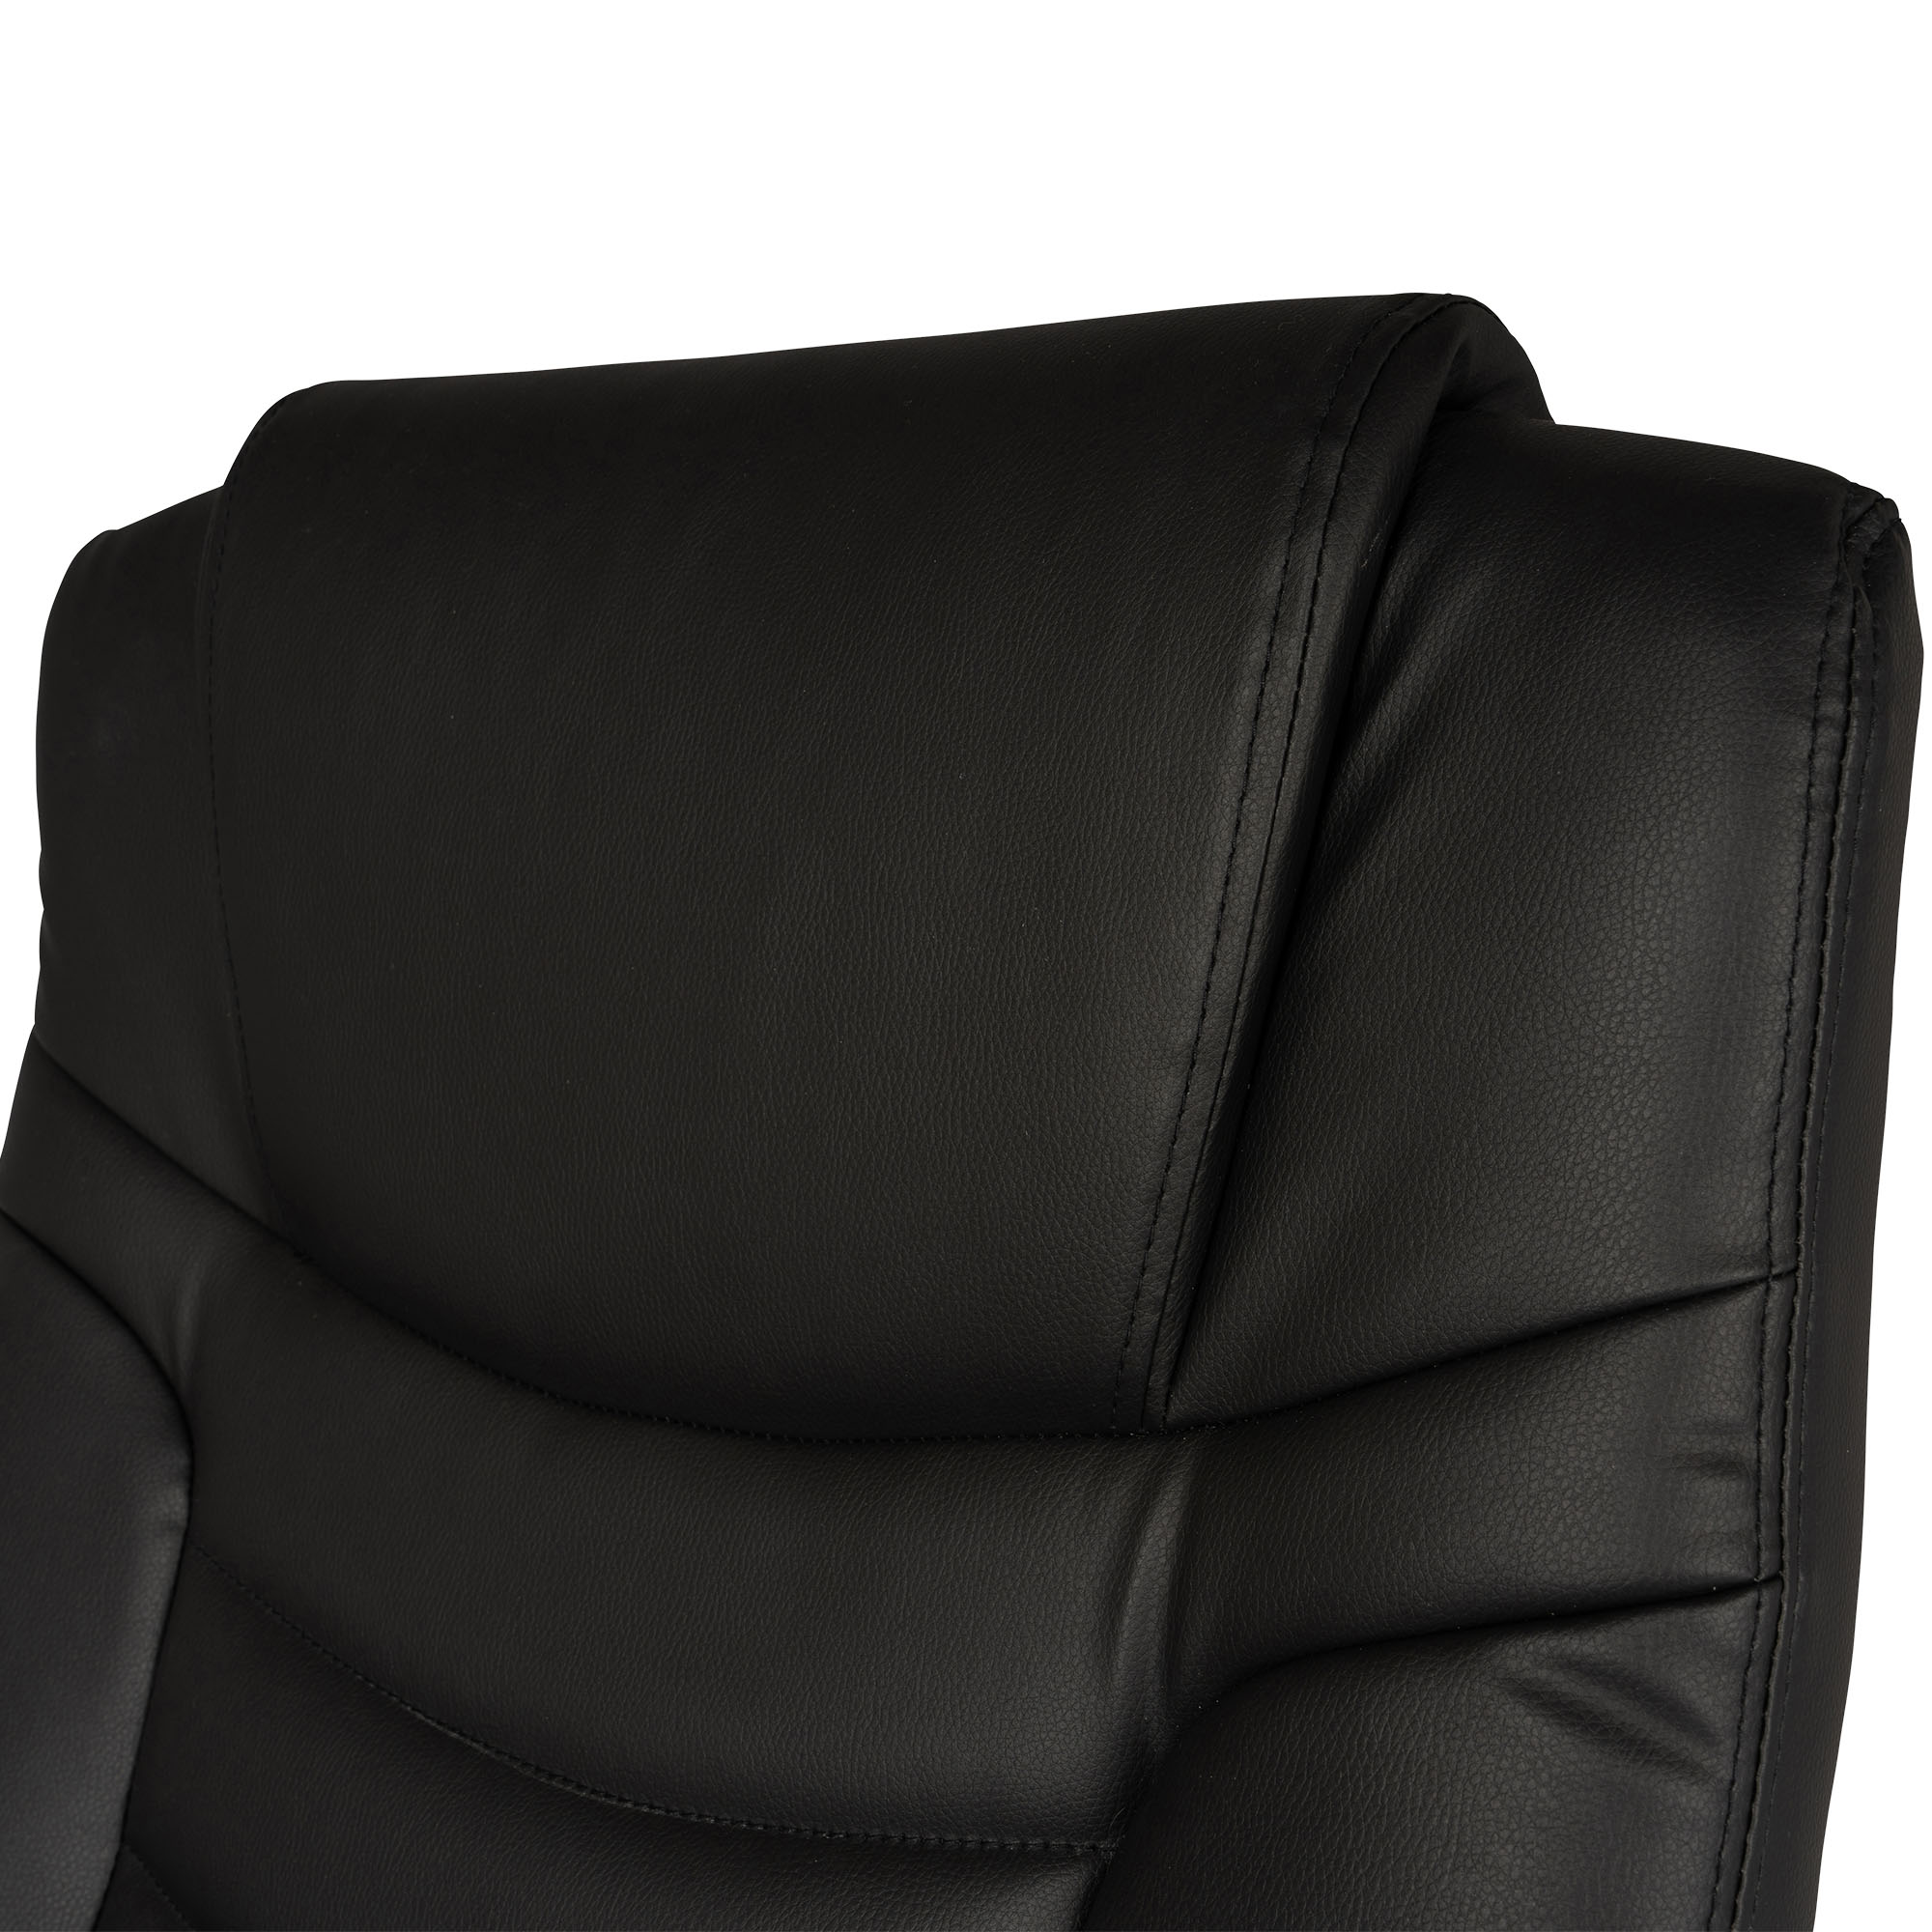 Ergodu Luxury Office Chair with High Sitting Comfort headrest